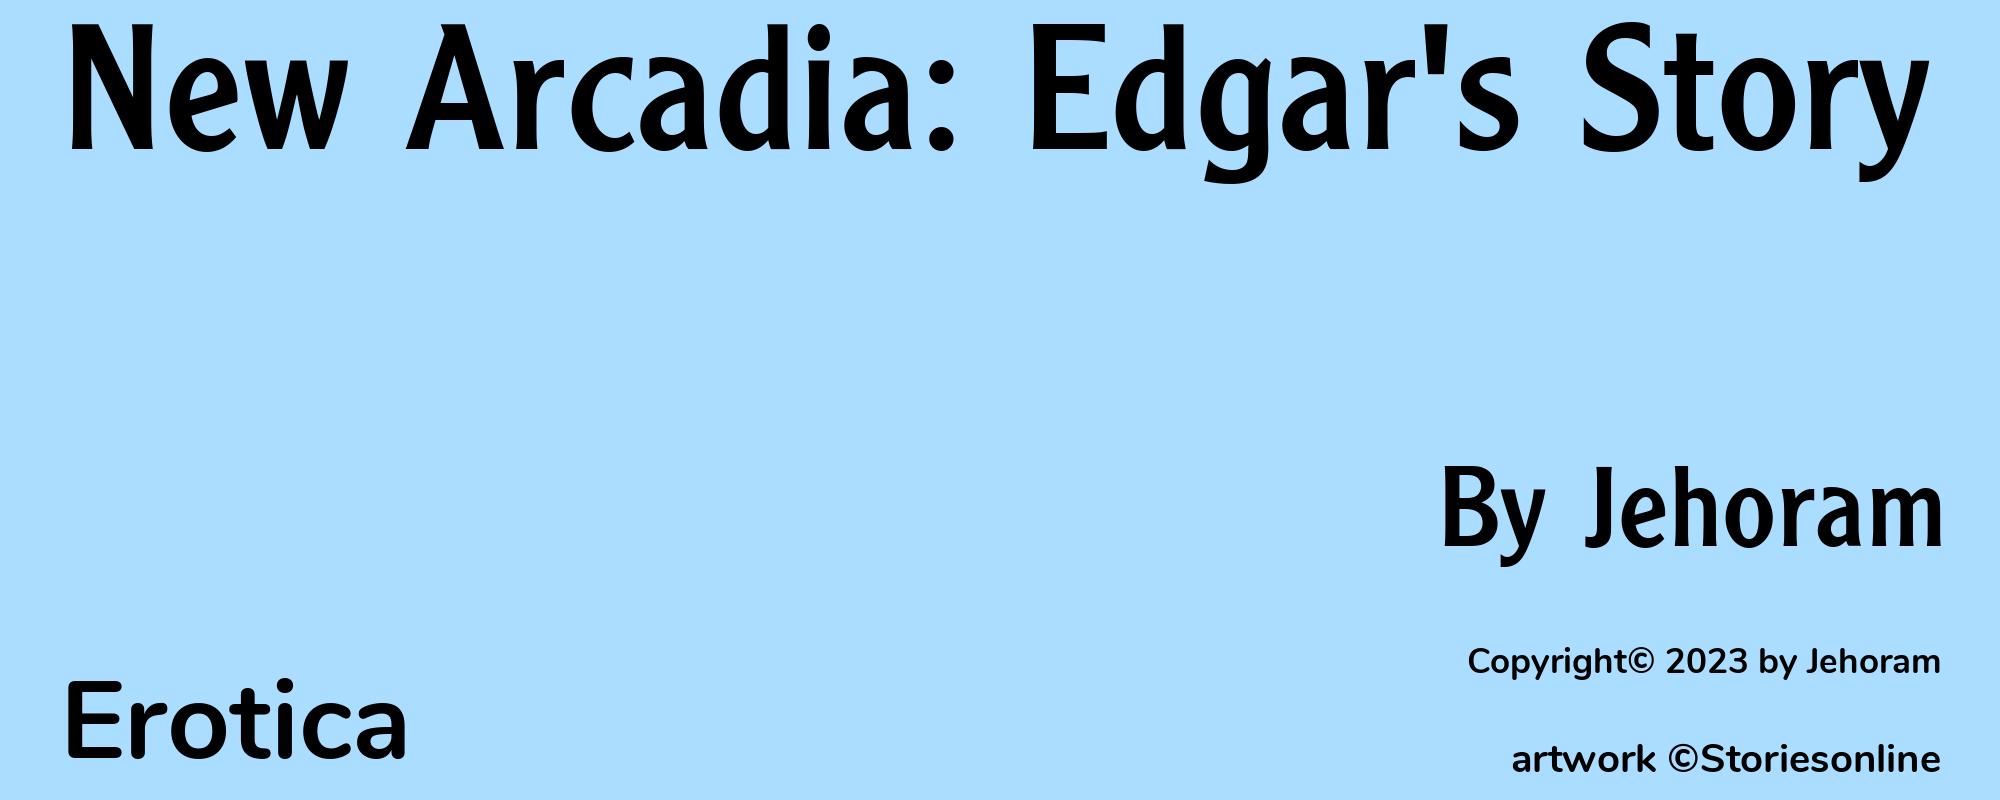 New Arcadia: Edgar's Story - Cover